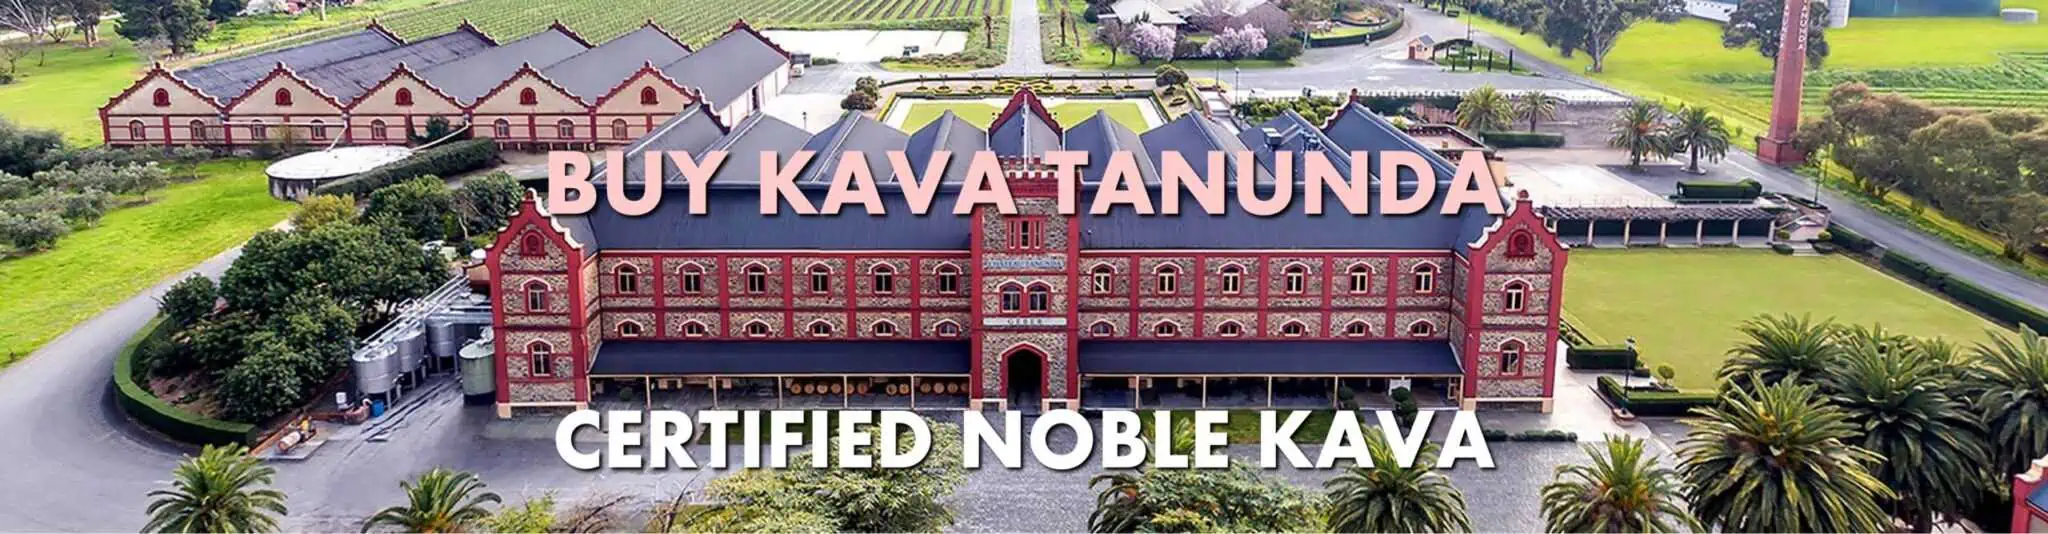 Chateau Tanunda in Barossa Valley South Australia with caption Buy Kava Tanunda Certified Noble Kava